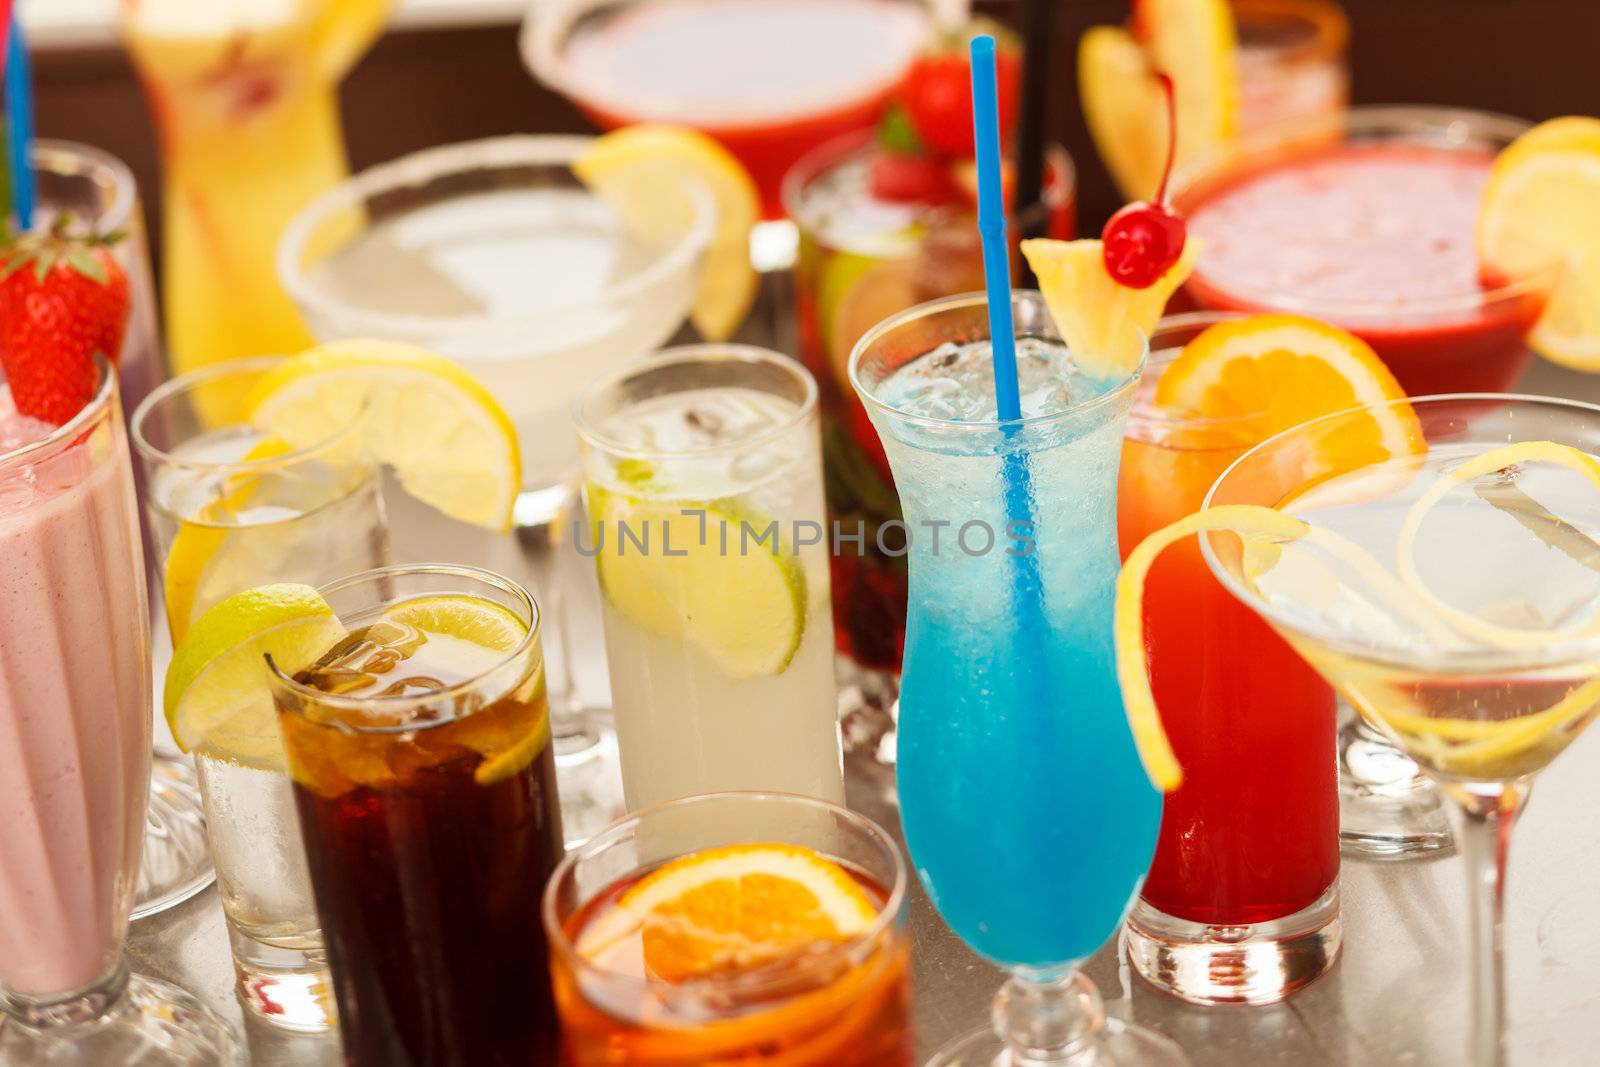 Colorful cocktails close up